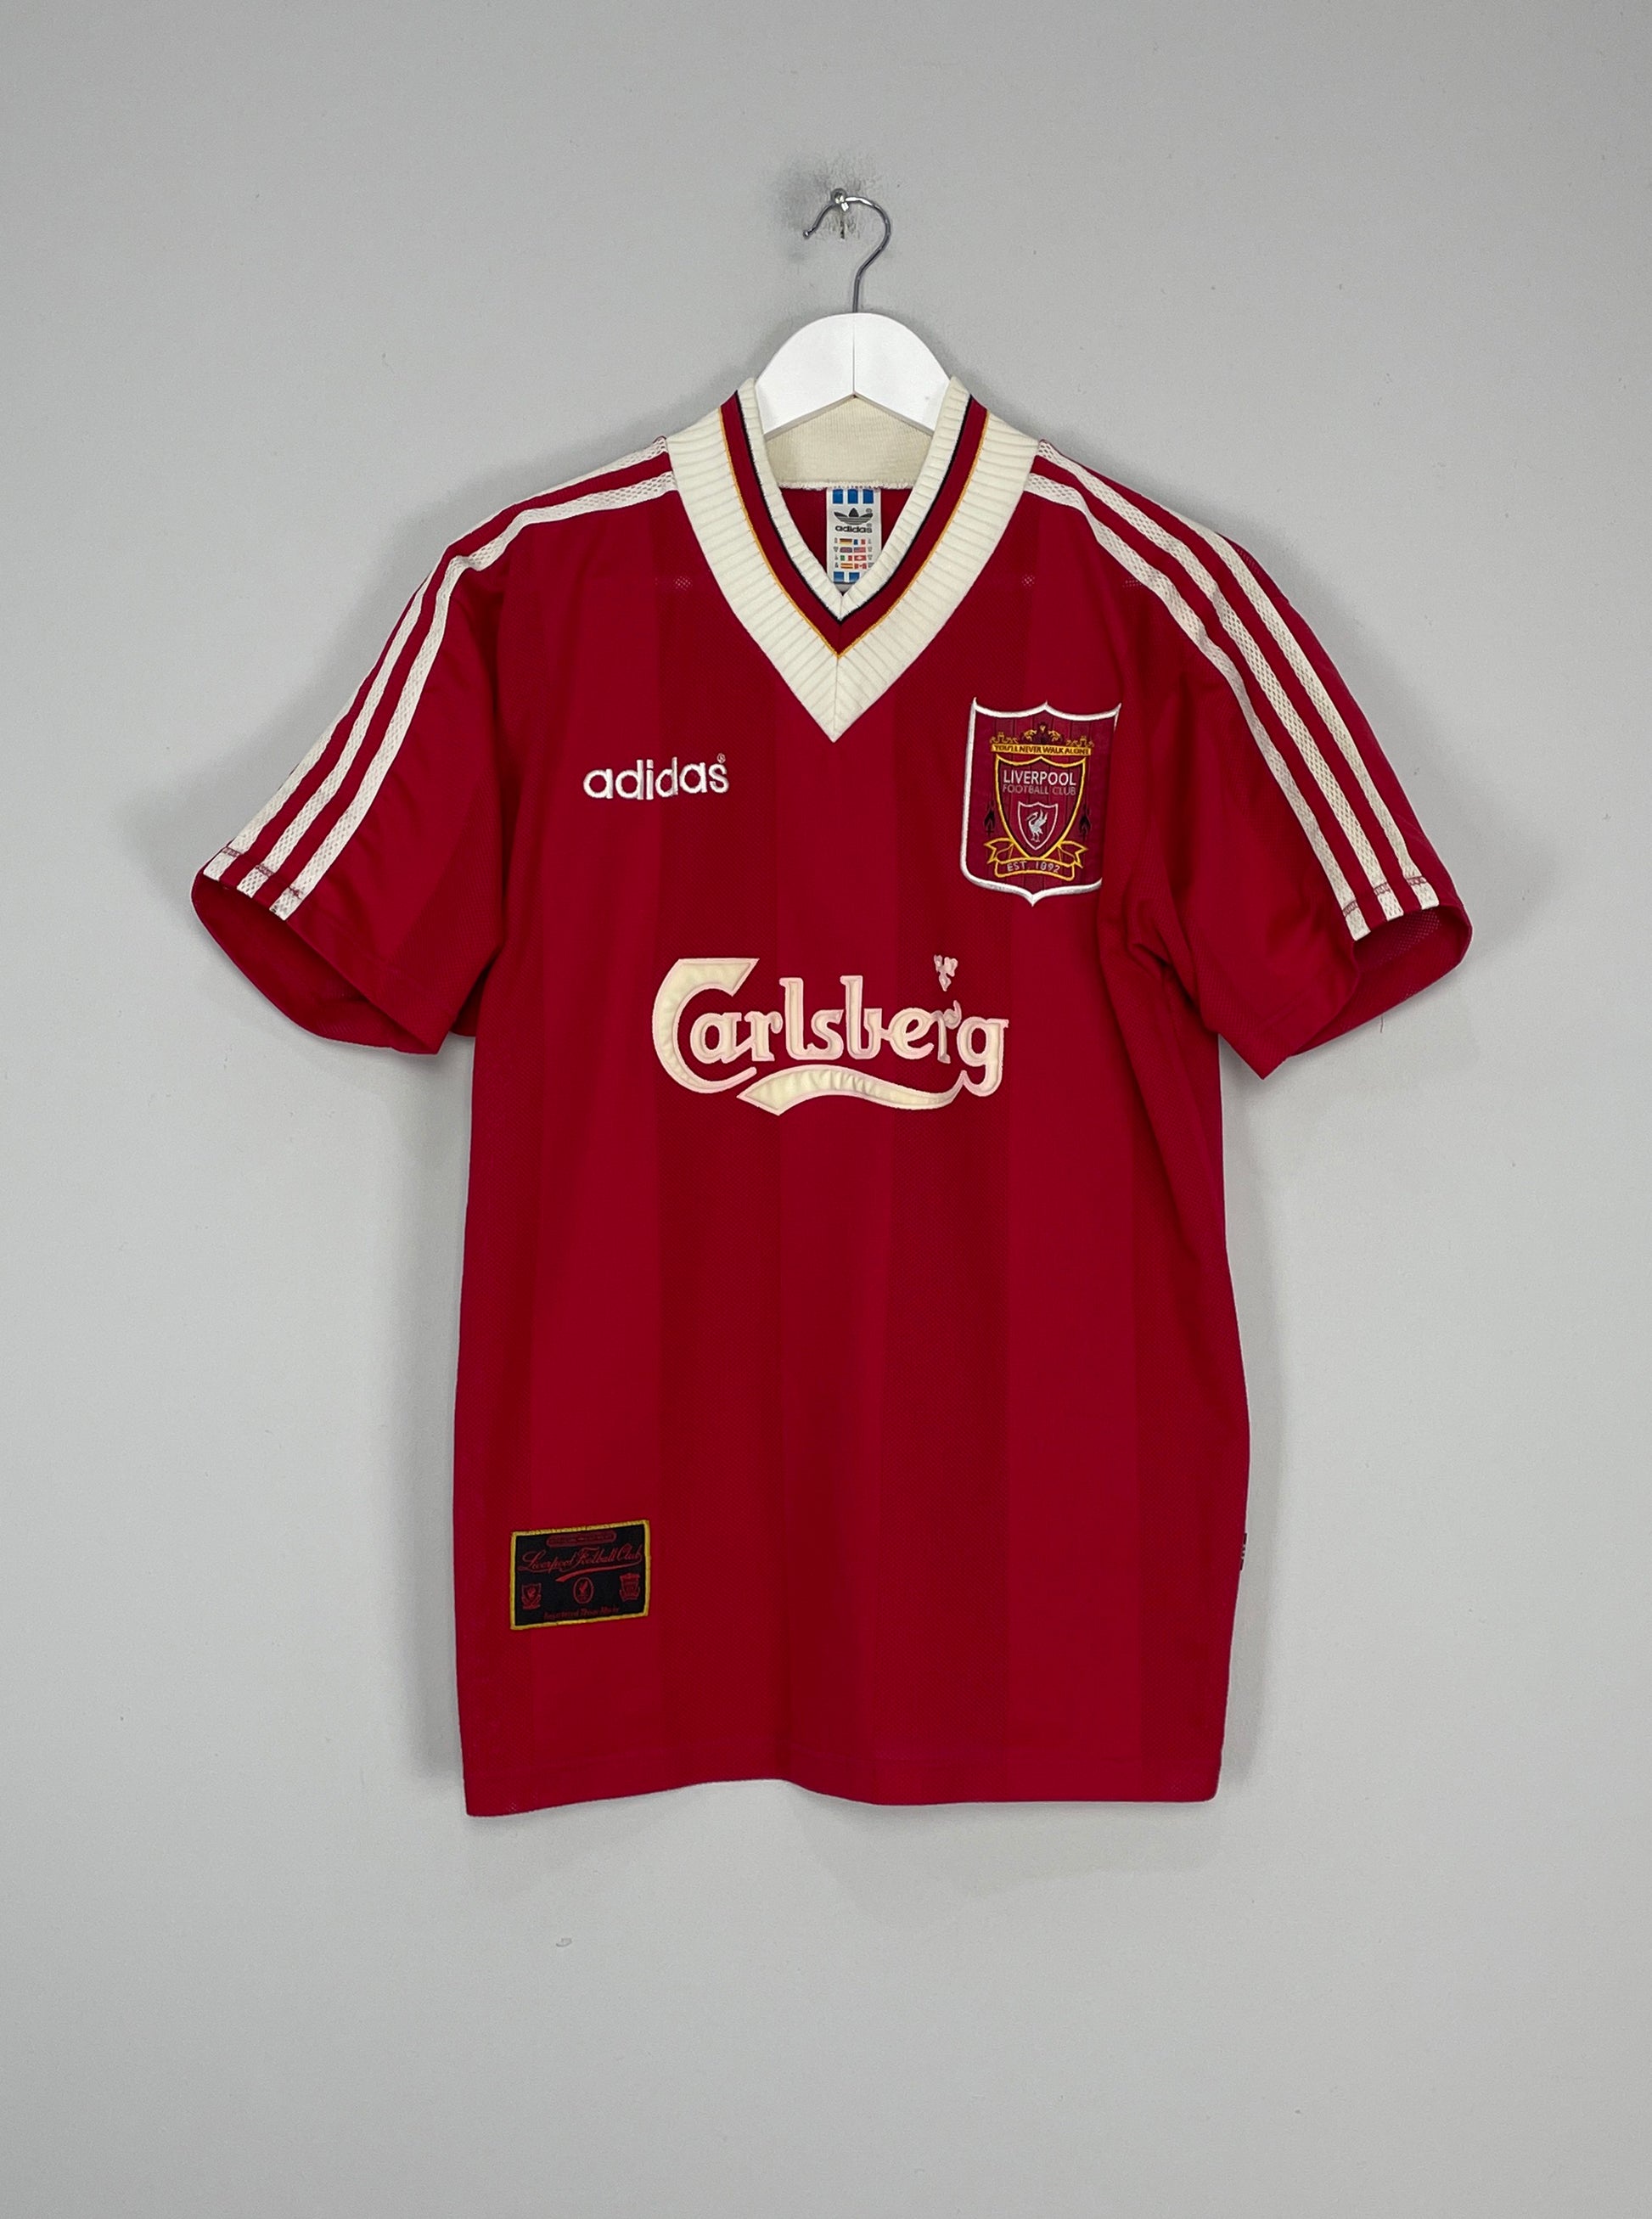 Cult Kits, Buy Liverpool Shirts